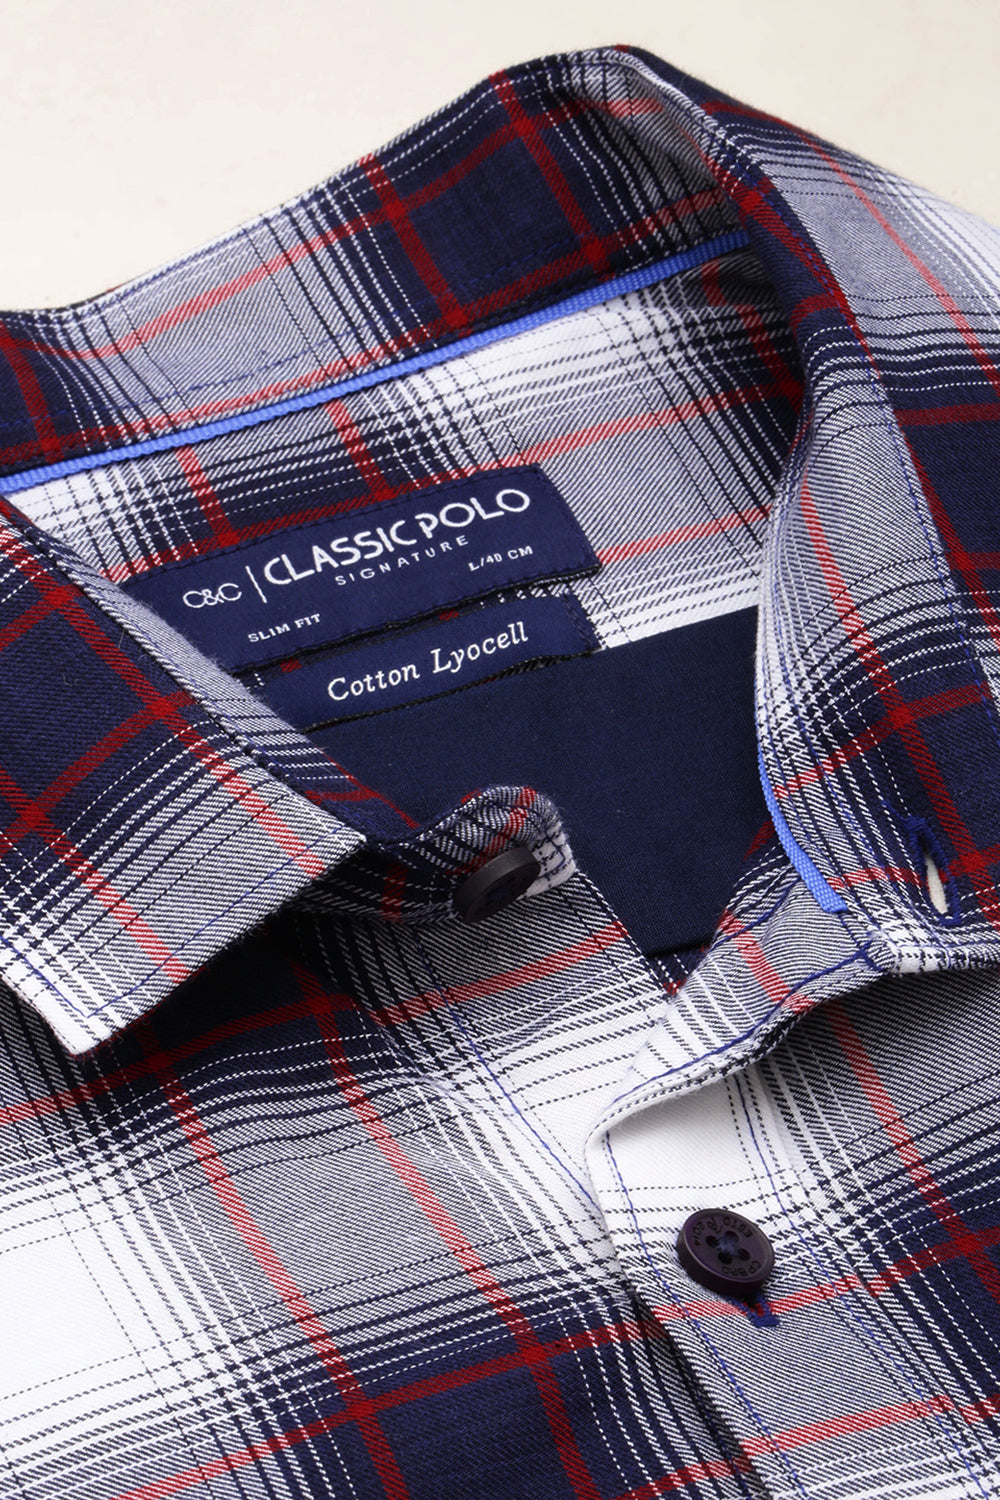 Classic Polo Men's Cotton Full Sleeve Checked Slim Fit Polo Neck Multicolur Woven Shirt | So1-157 A